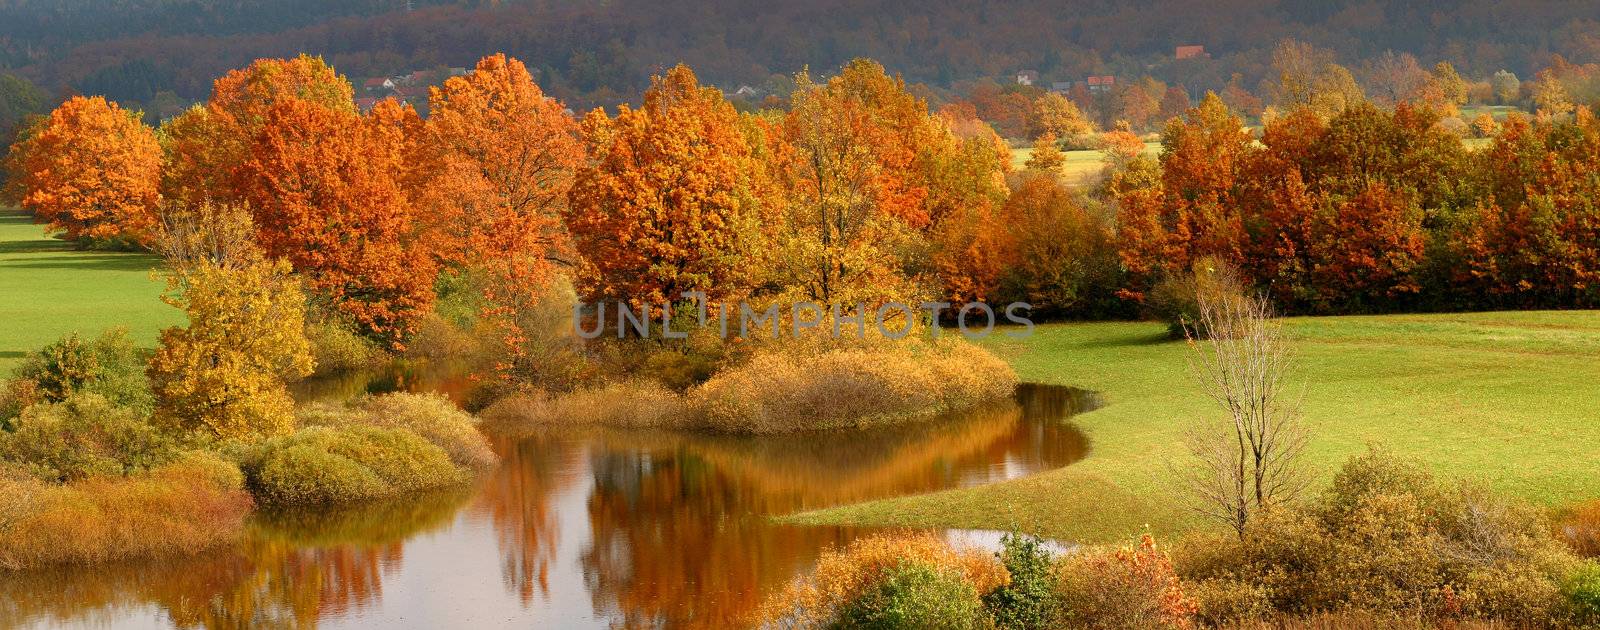 Autumn coloured trees by camerziga